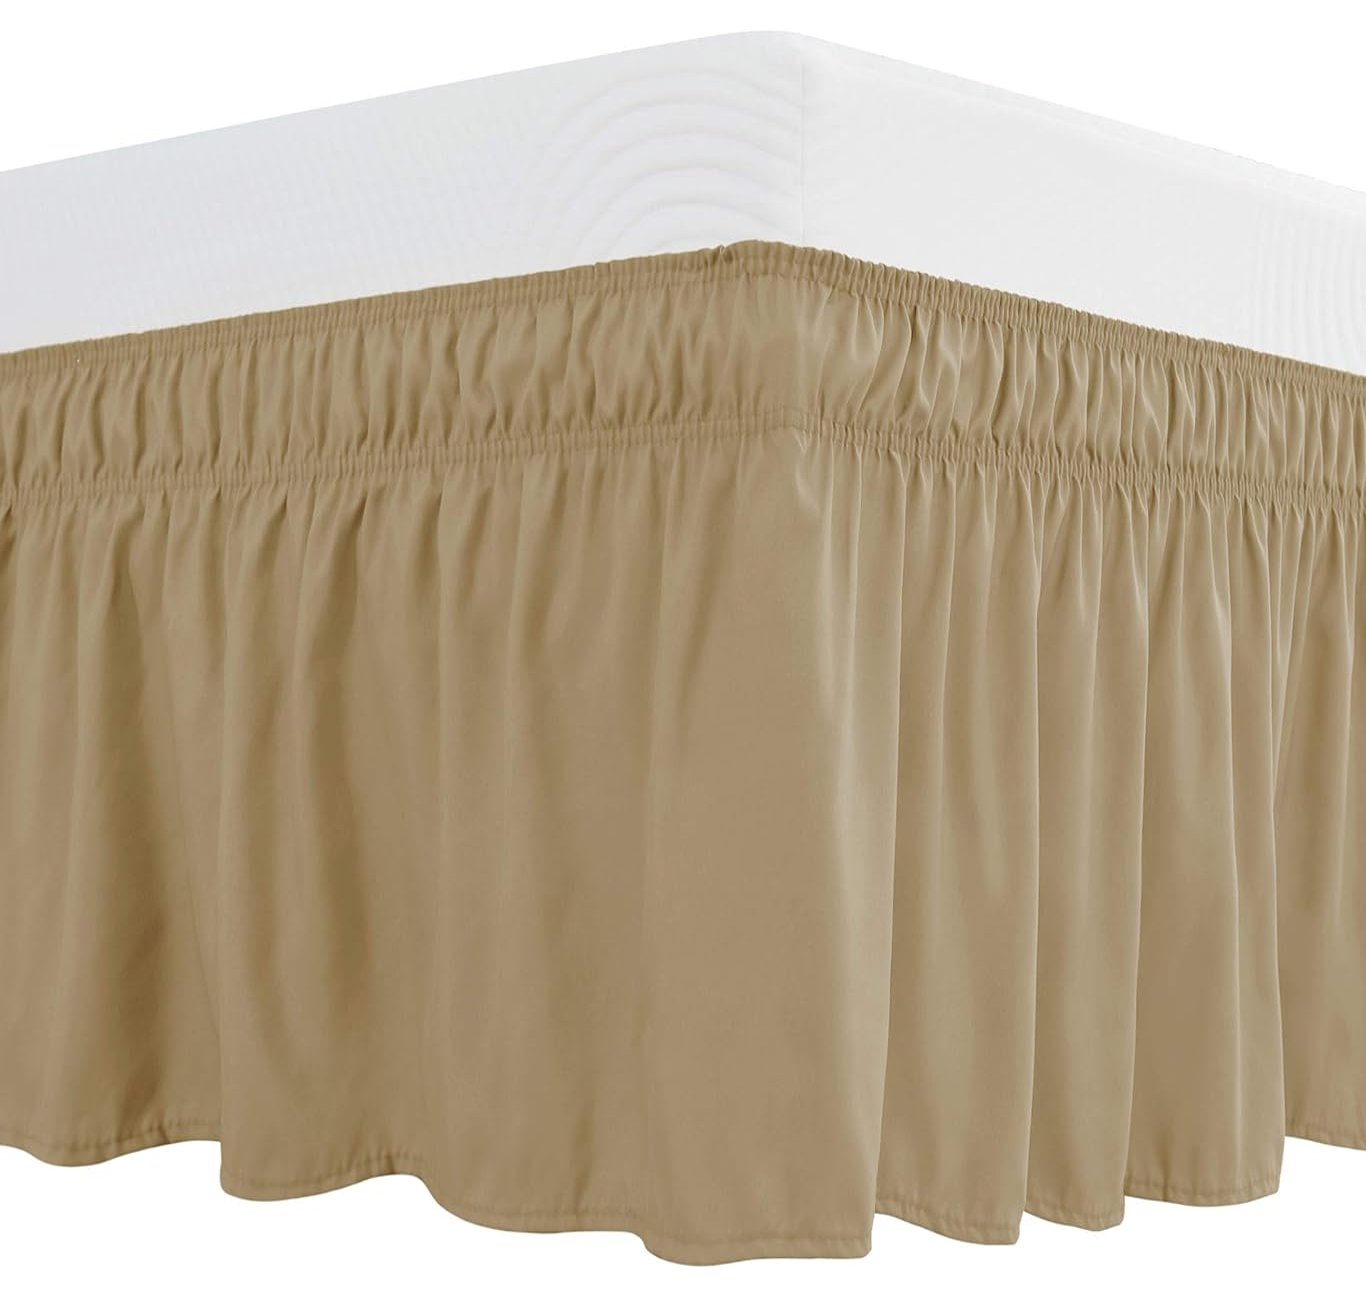 Subtex Easy Fit Bed Skirt: Microfiber, 16" Drop, Wrinkle & Fade Resistant